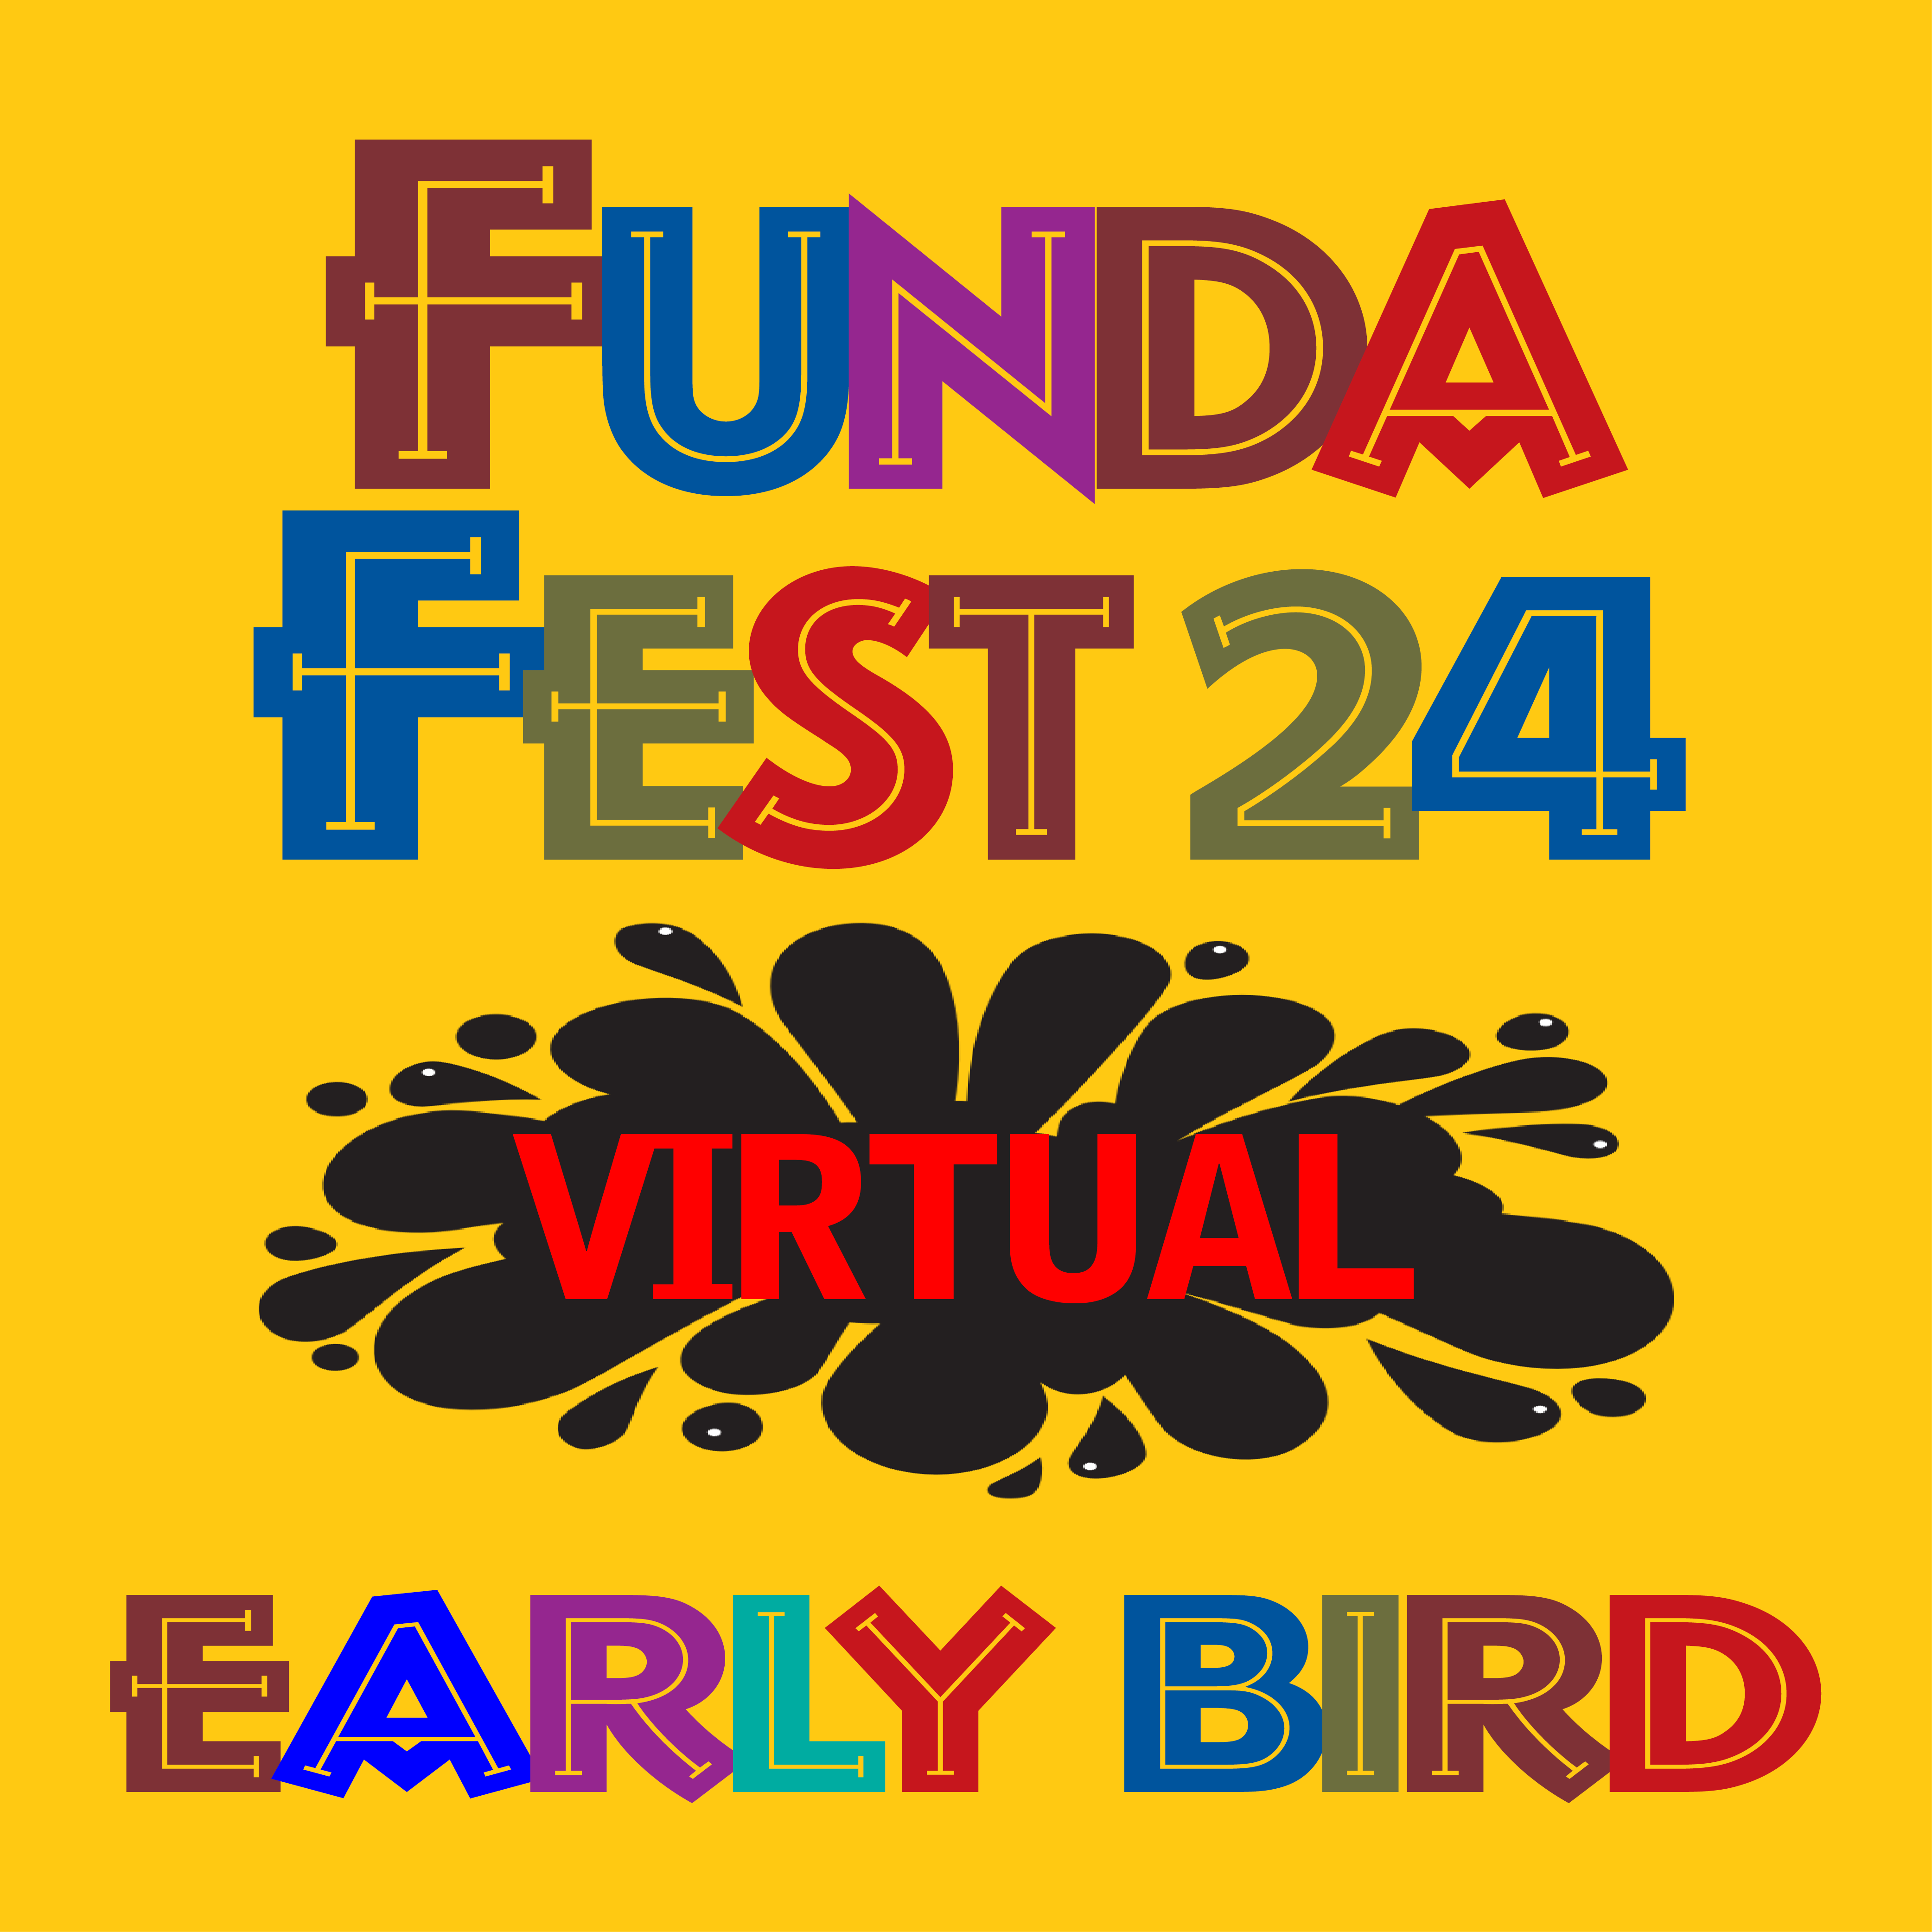 Early Bird Pass Funda Fest 24